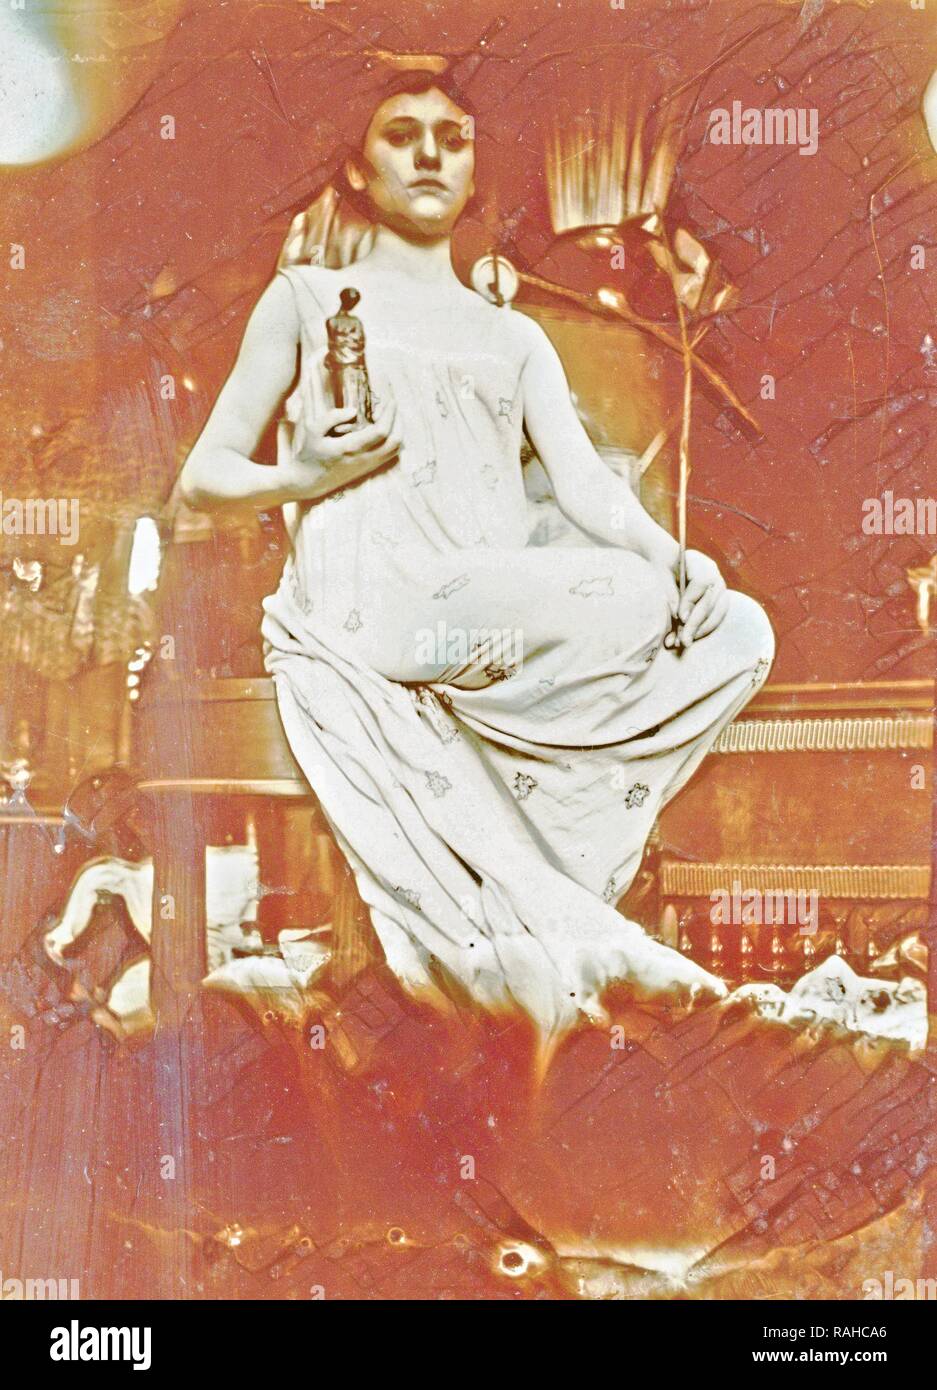 Donna figurina, Alfons Maria Mucha, Alphonse Mucha, ceco di Art Nouveau 1895-1905. Reinventato da Gibon. Arte Classica reinventato Foto Stock